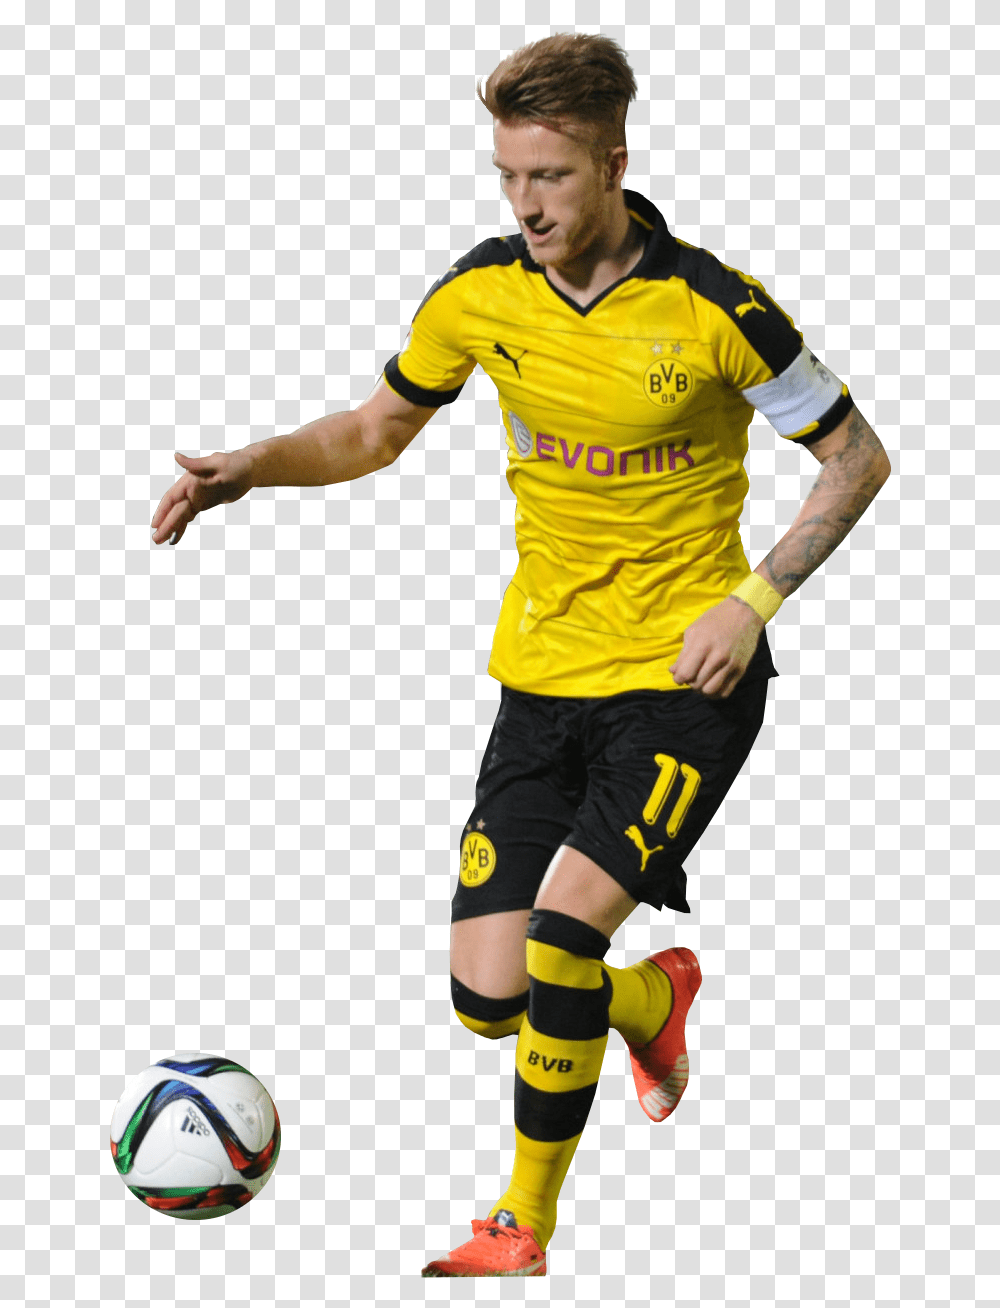 Marco Reusrender Marco Reus Dortmund Render, Sphere, Person, Soccer Ball, Football Transparent Png